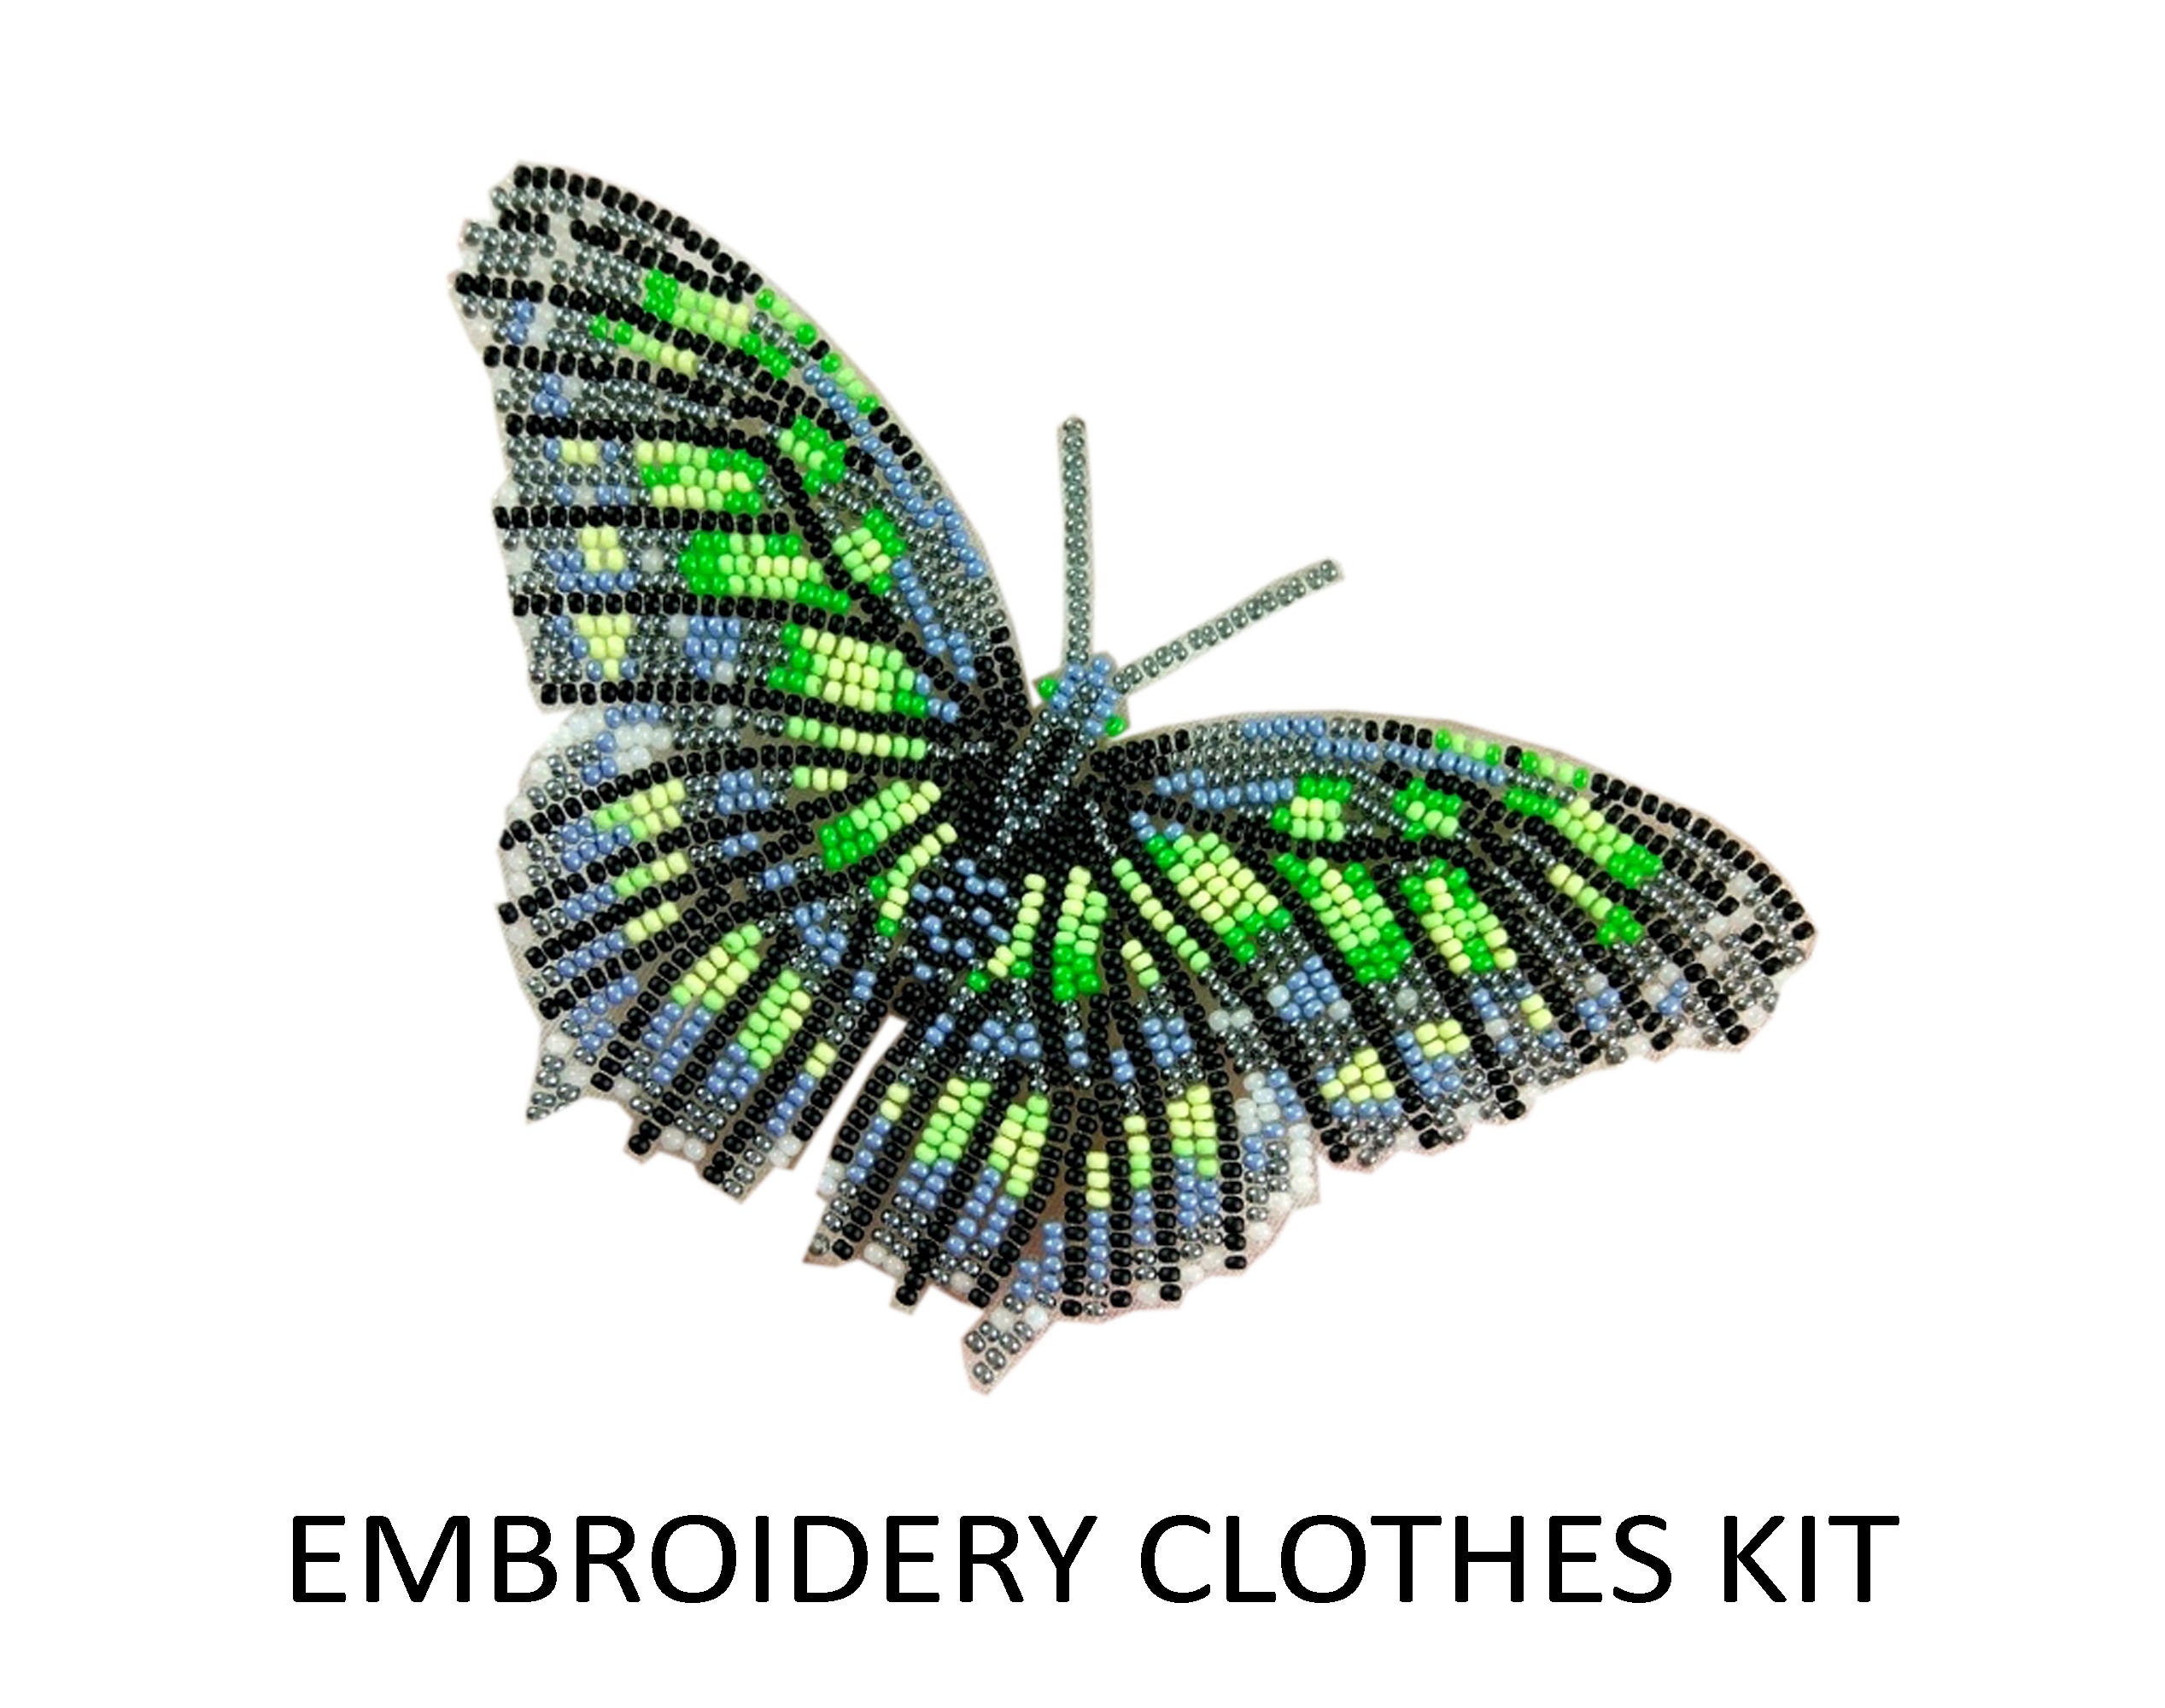 Bead Embroidery Kit Butterfly Needlepoint Kit Art Butterfly Embroidery Kit,  Butterfly Beading Pattern, Hand Embroidery, Embroidery Pattern 